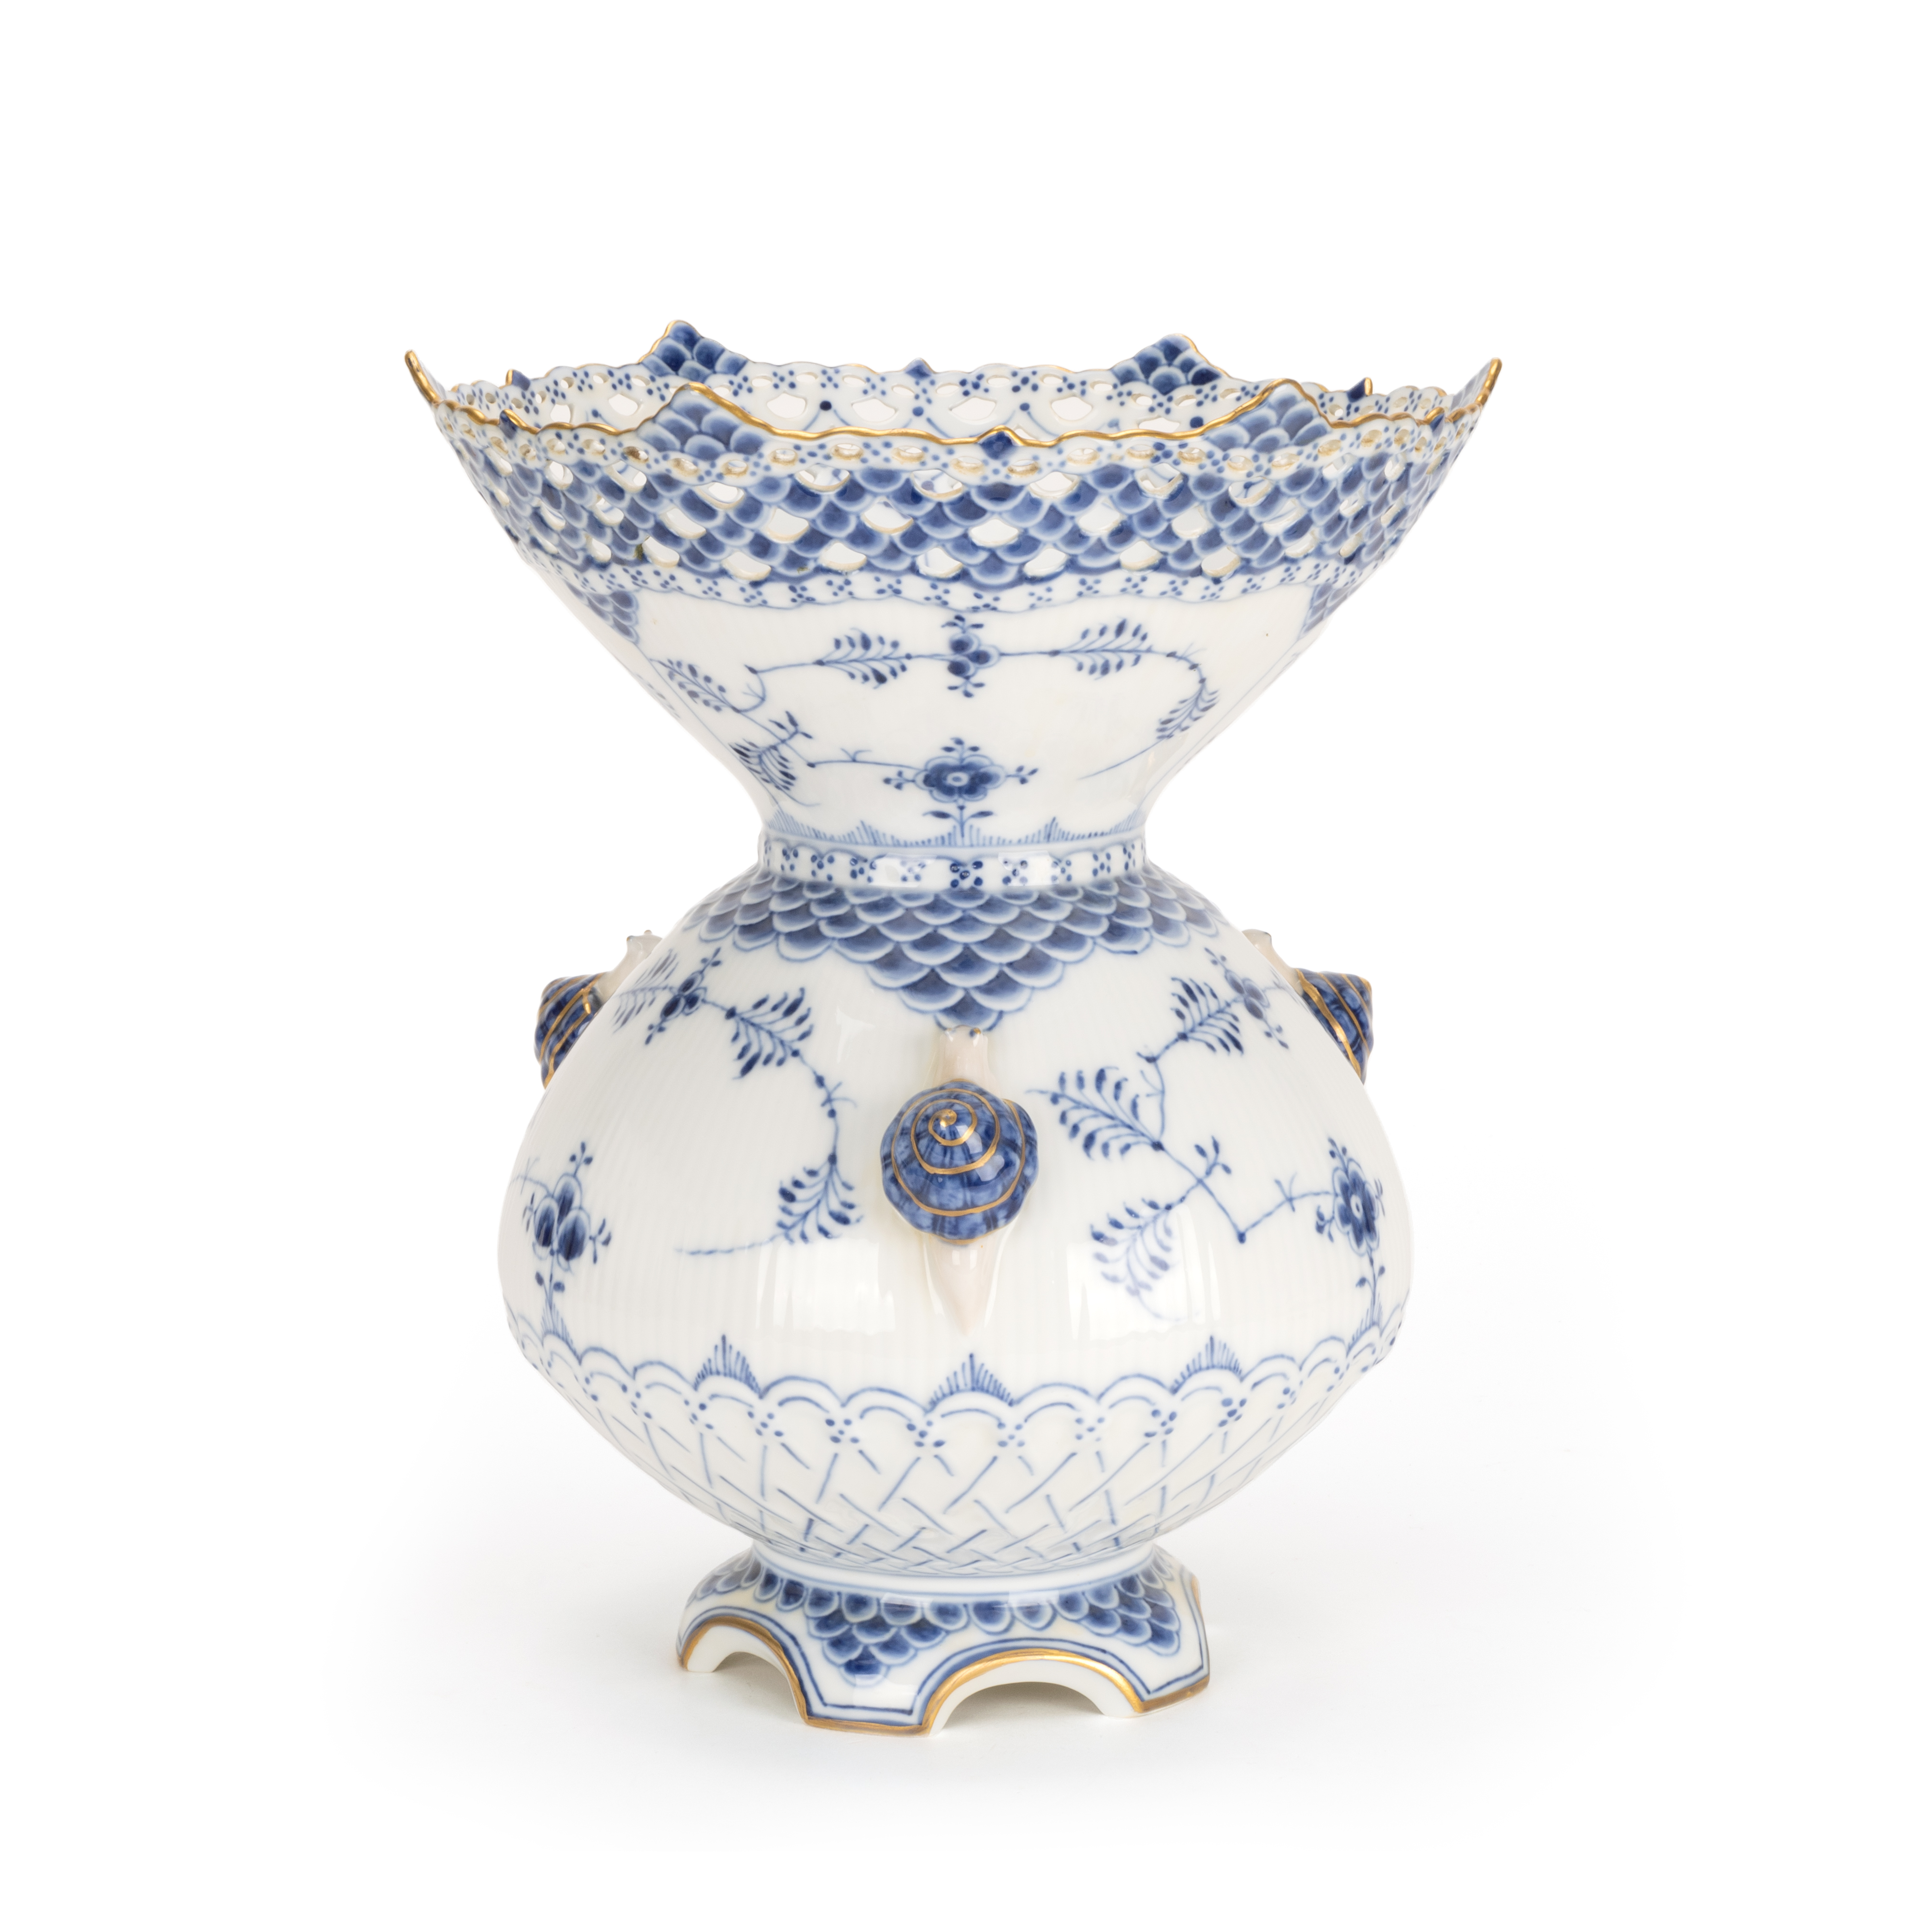 Royal Copenhagen große Vase 'Musselmalet' mit Schnecken - Image 2 of 4